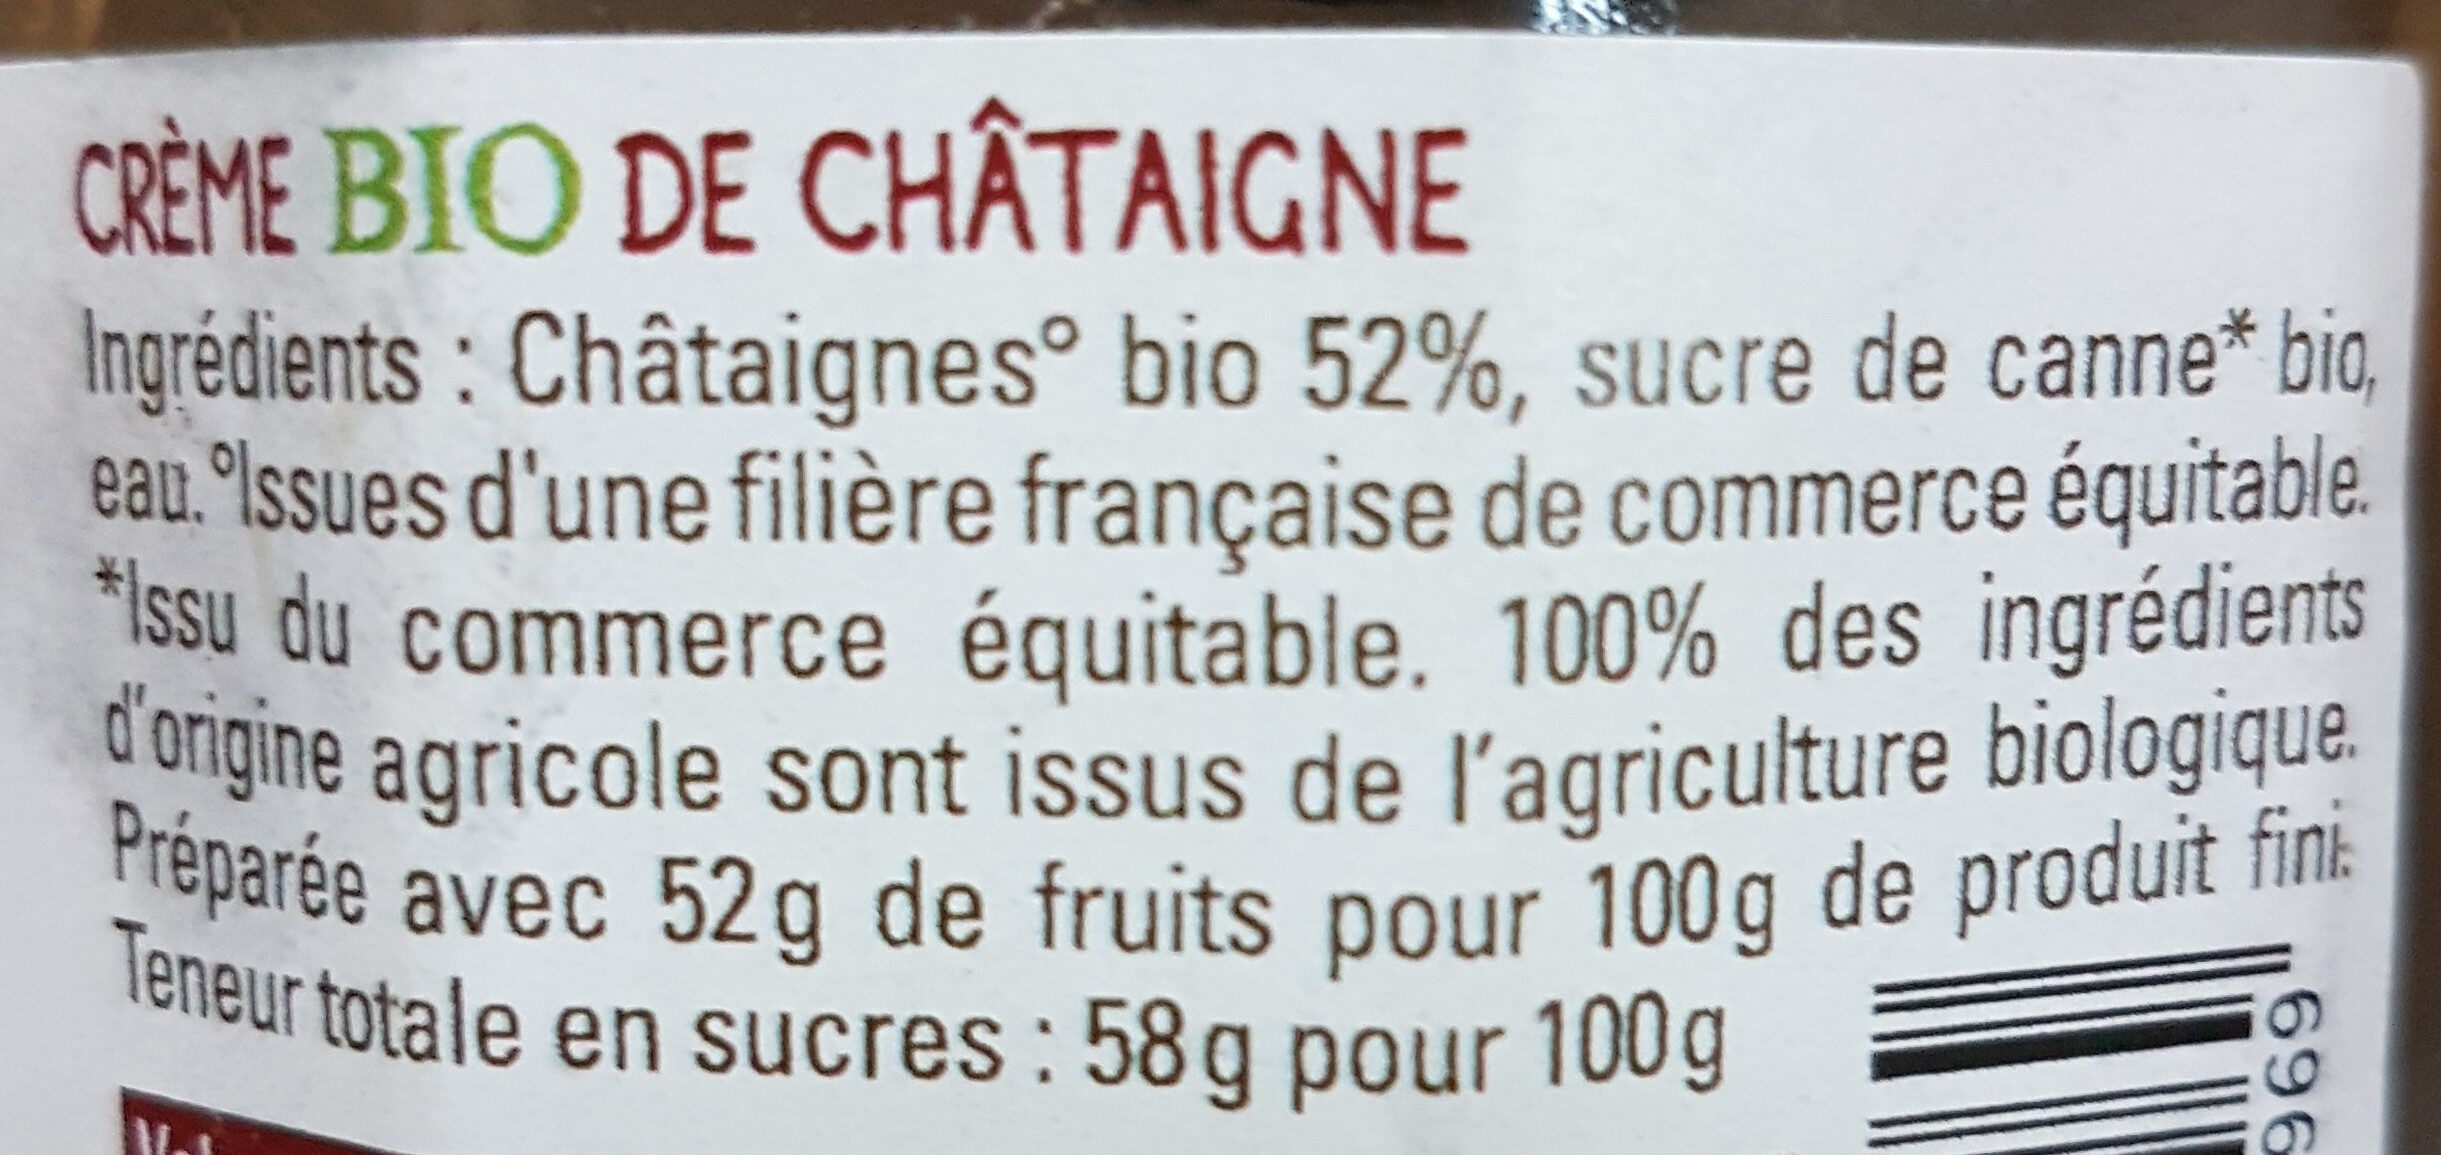 Crème bio de châtaignes - Ingrediënten - fr